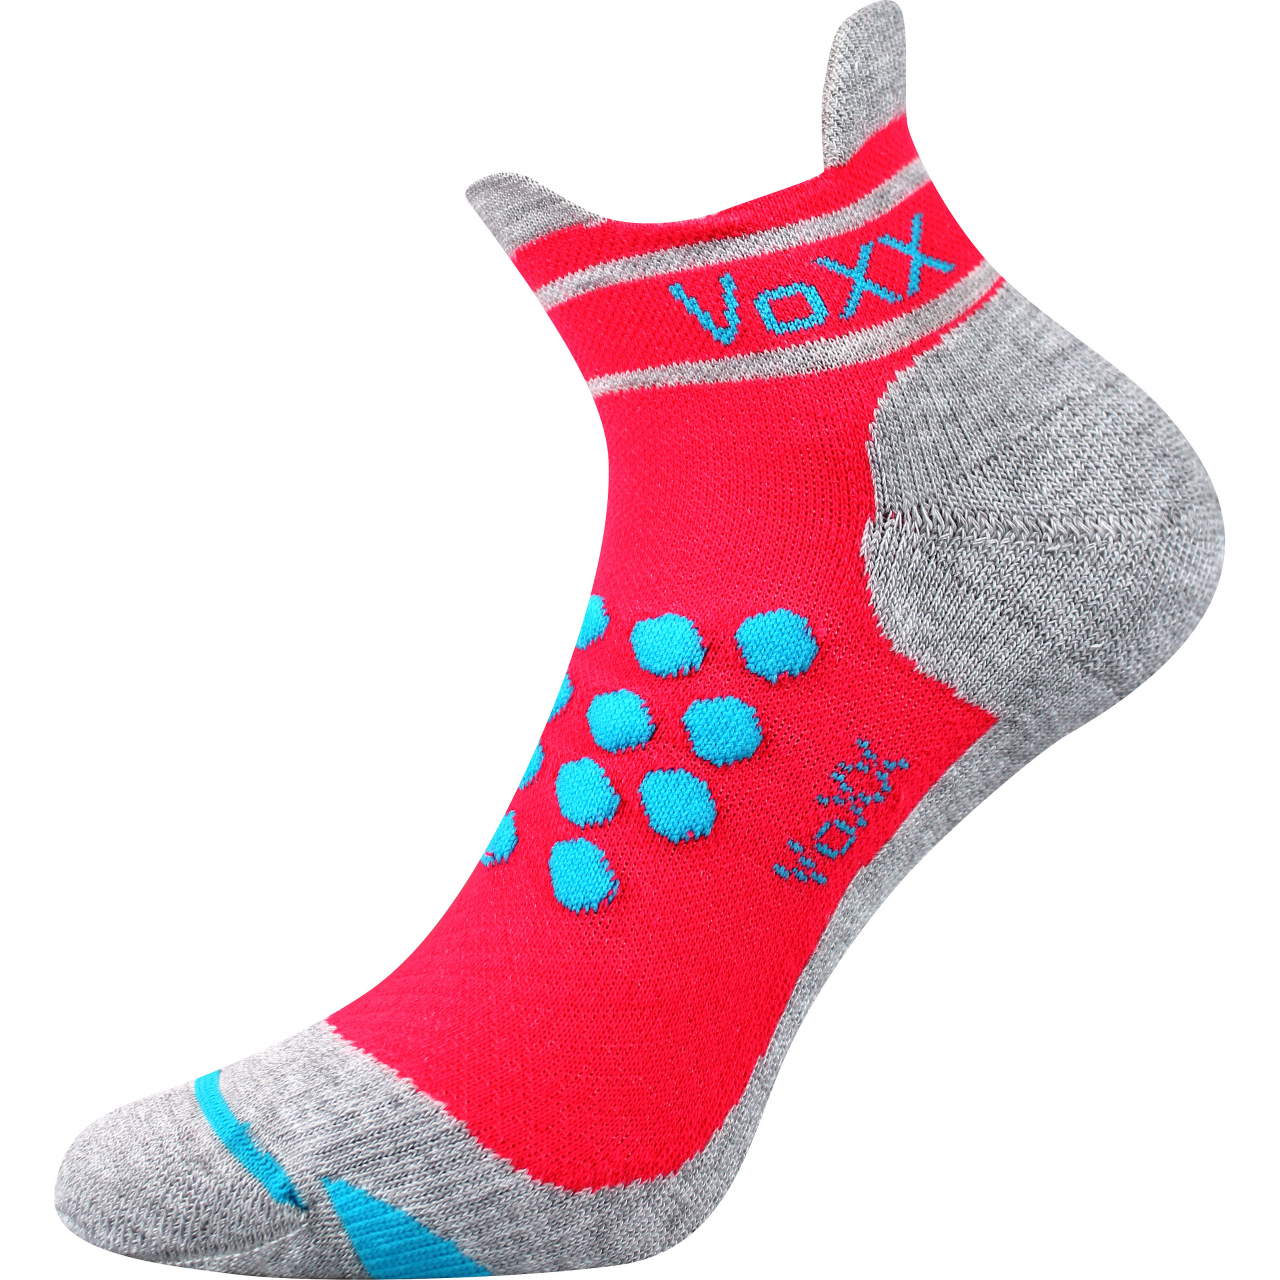 Ponožky unisex sportovní Voxx Sprinter - růžové-šedé, 35-38